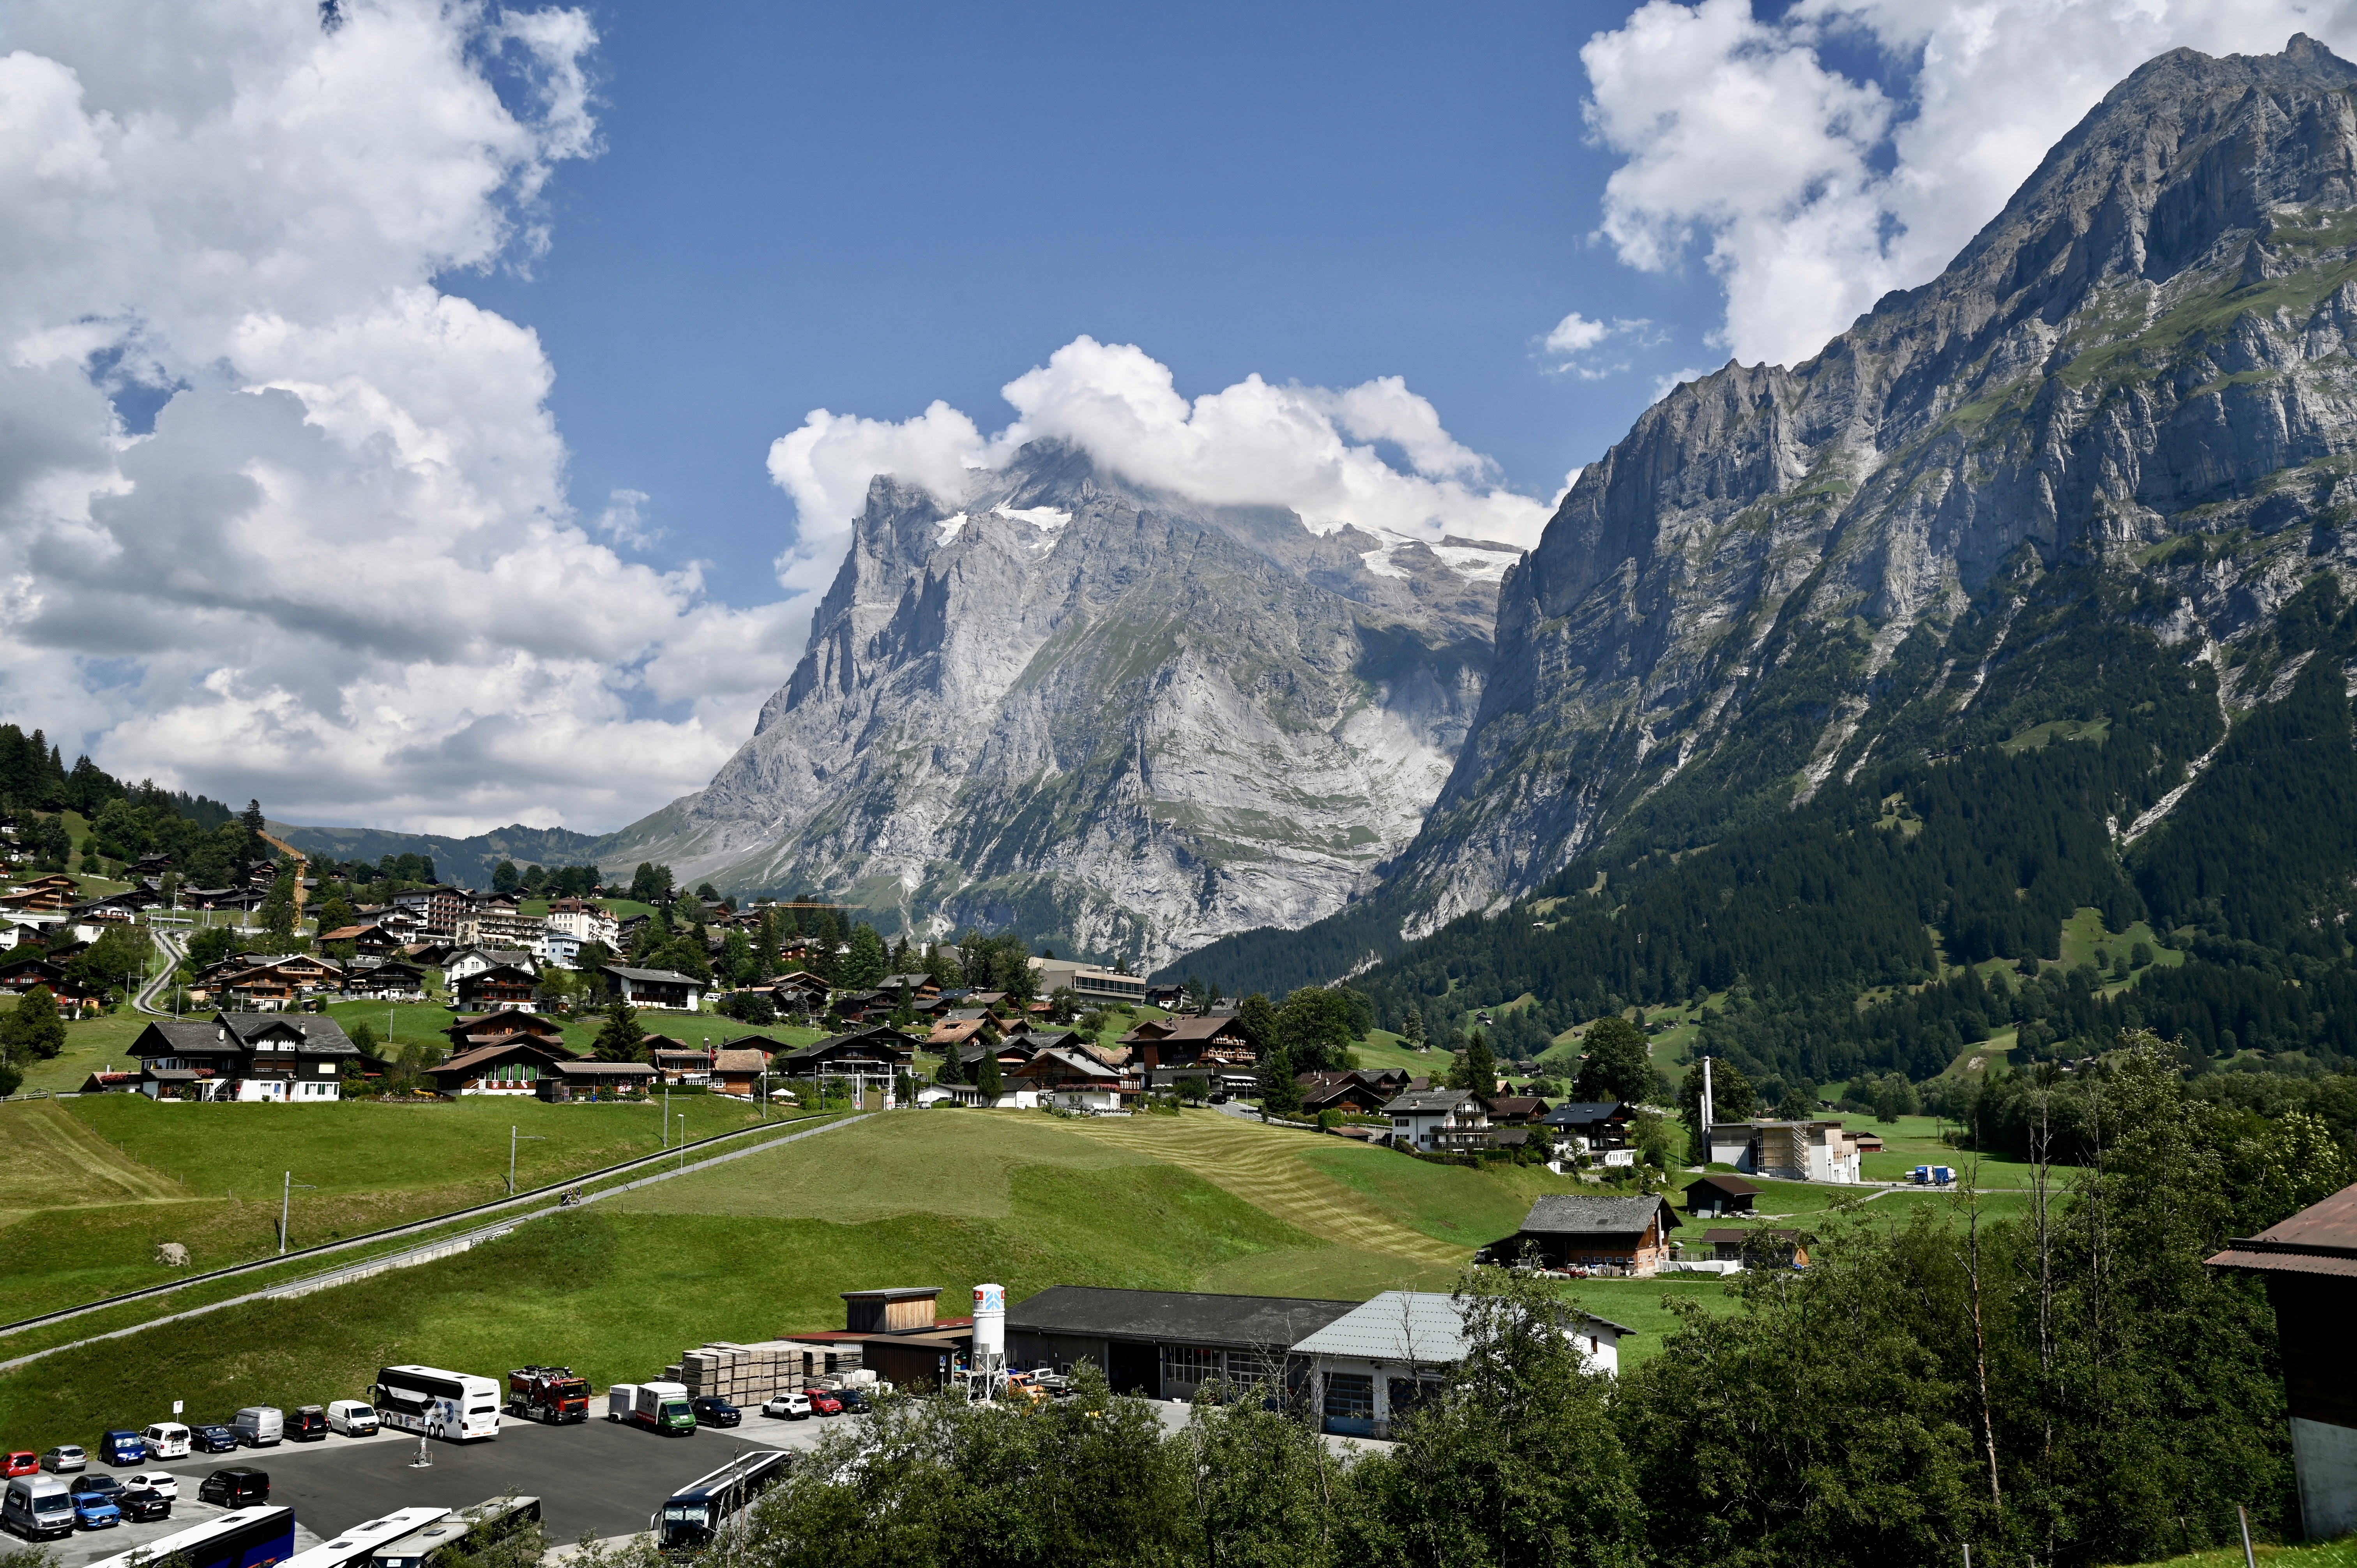 Swiss alps with village below